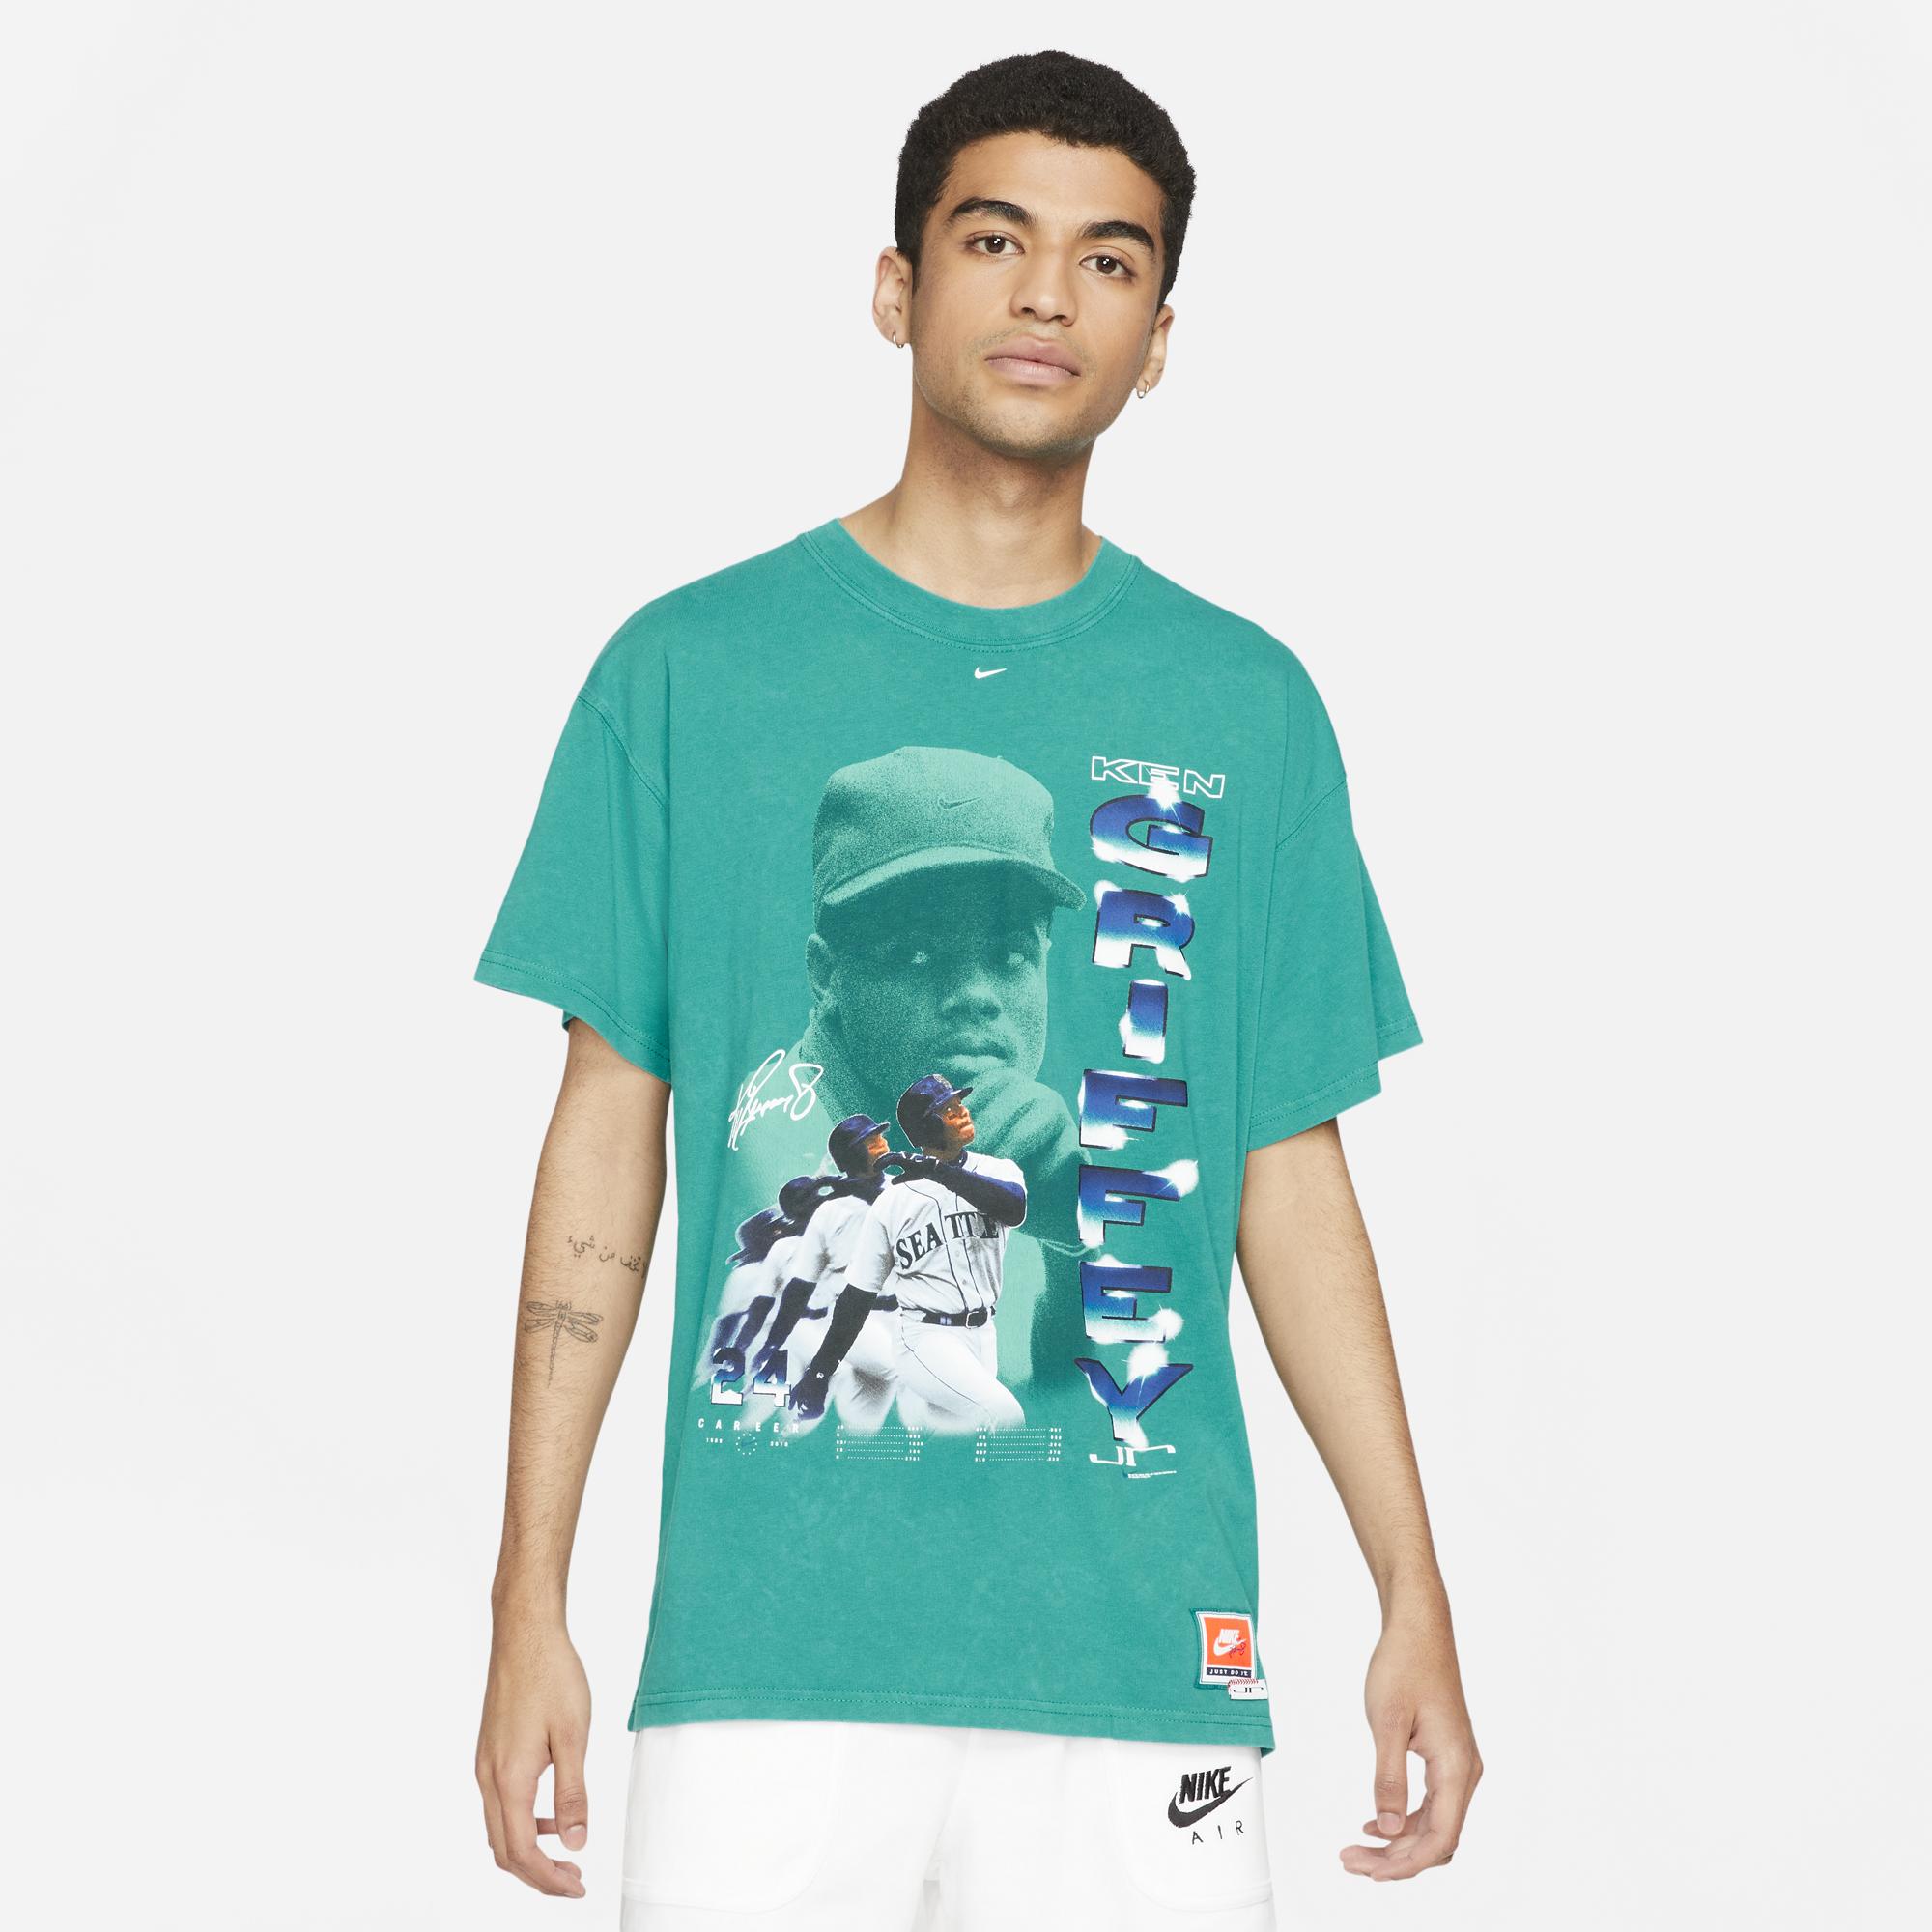 Nike Cotton Sportswear Max 90 T-shirt in Teal/Black (Green) for Men - Lyst